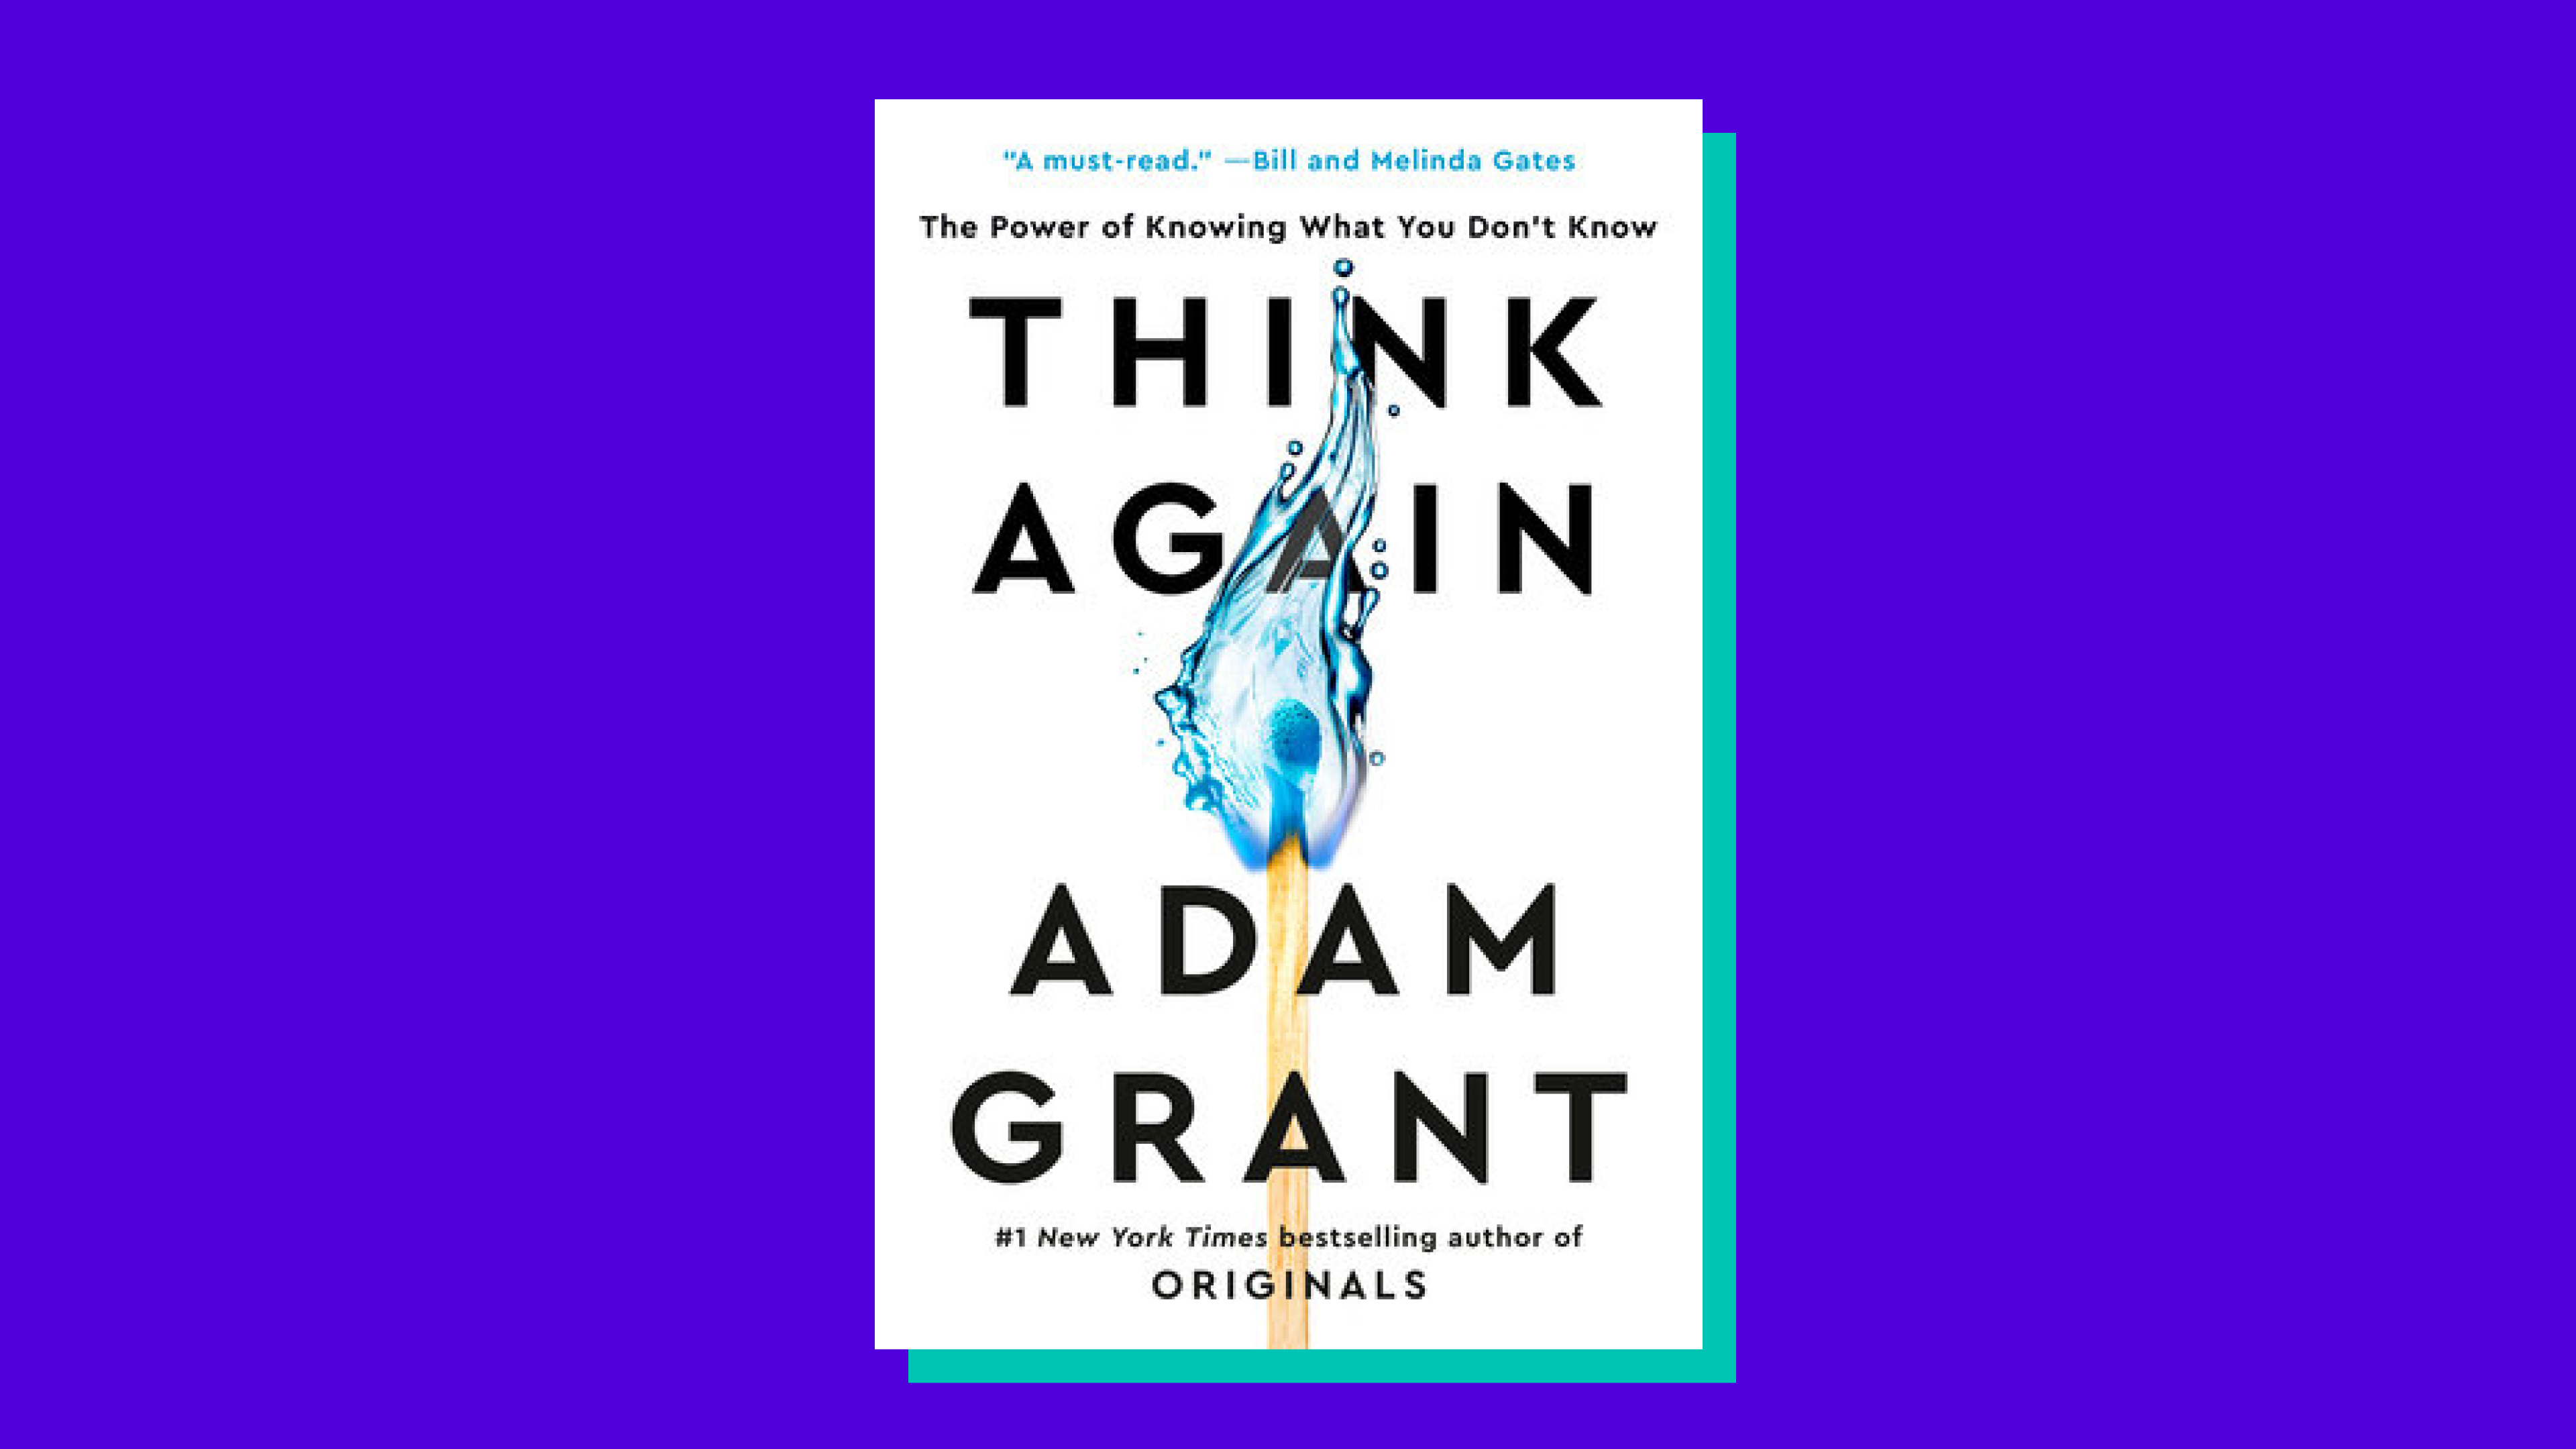 “Think Again” by Adam Grant